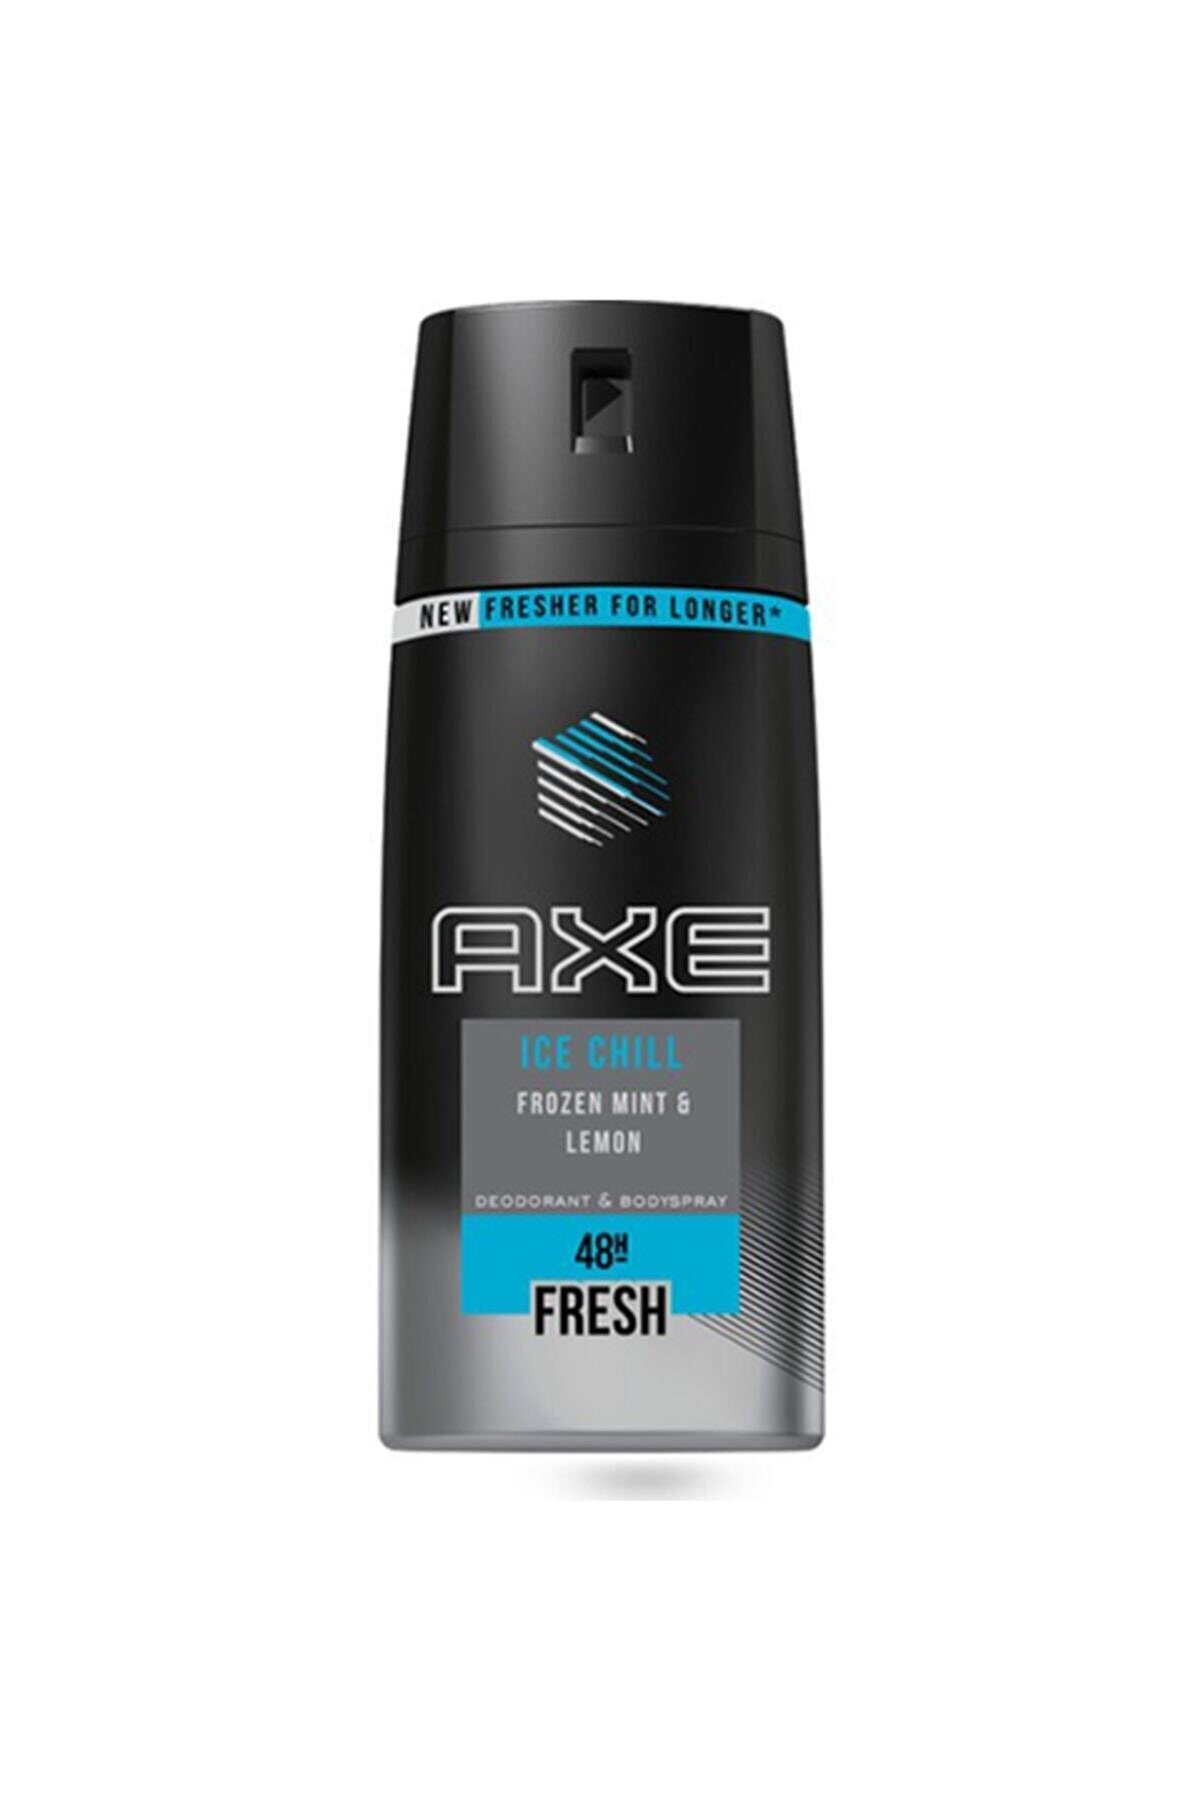 Axe Ice Chill Body Spray 150 ml